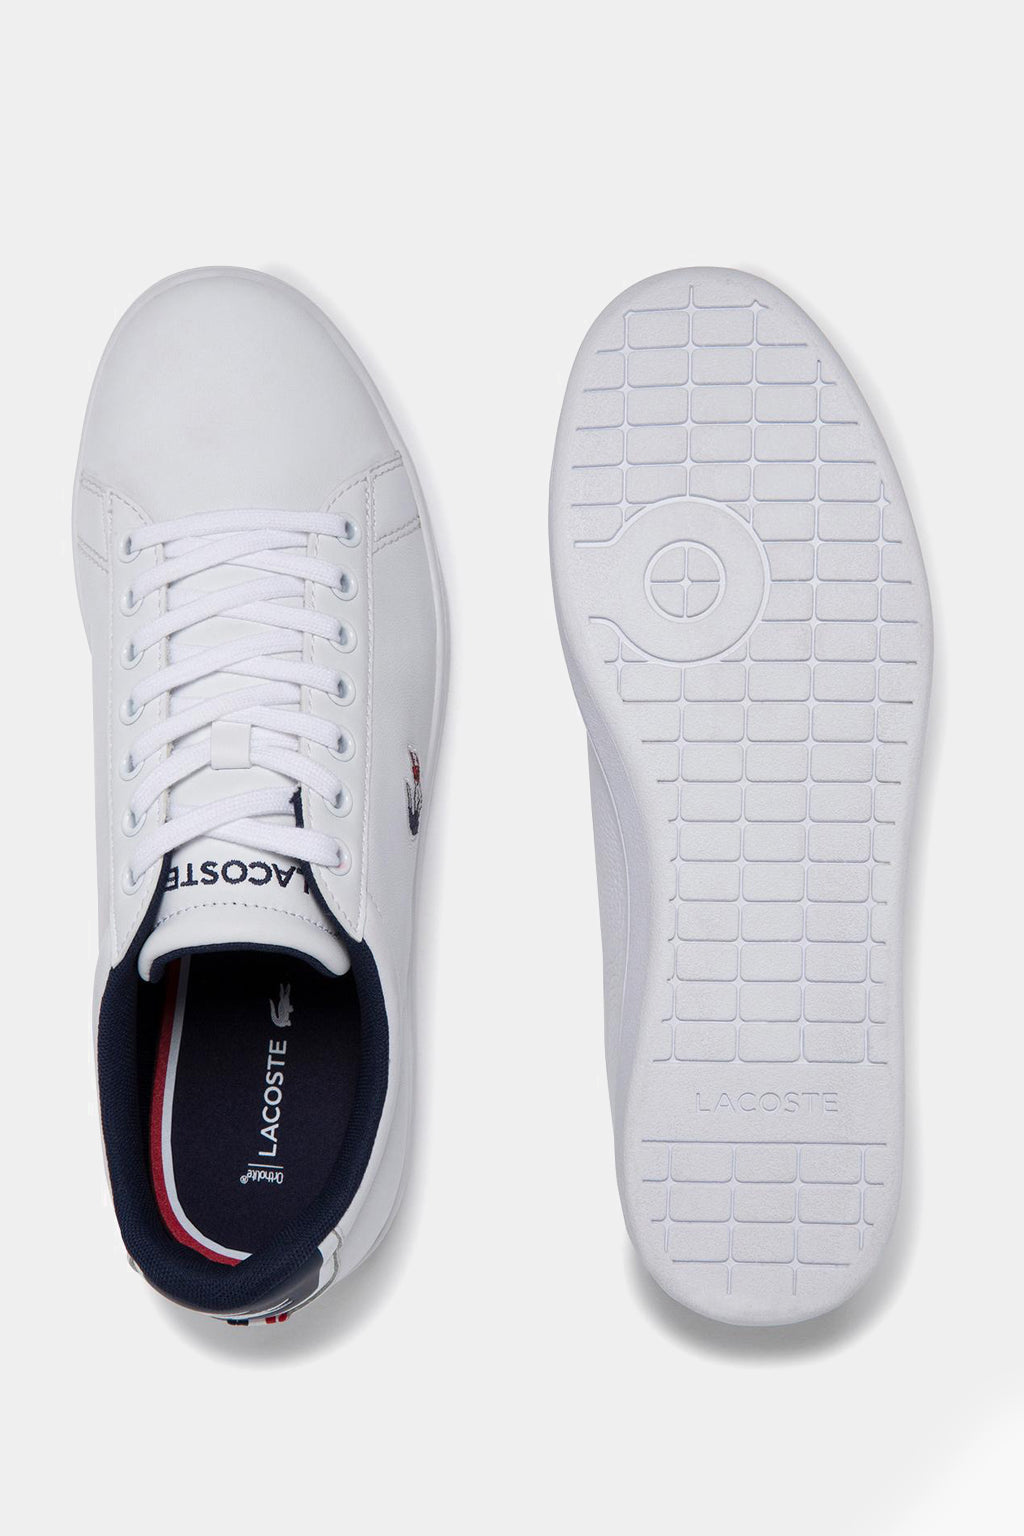 Lacoste - Lacoste Carnaby Evo Tri 1 Men's Sneakers